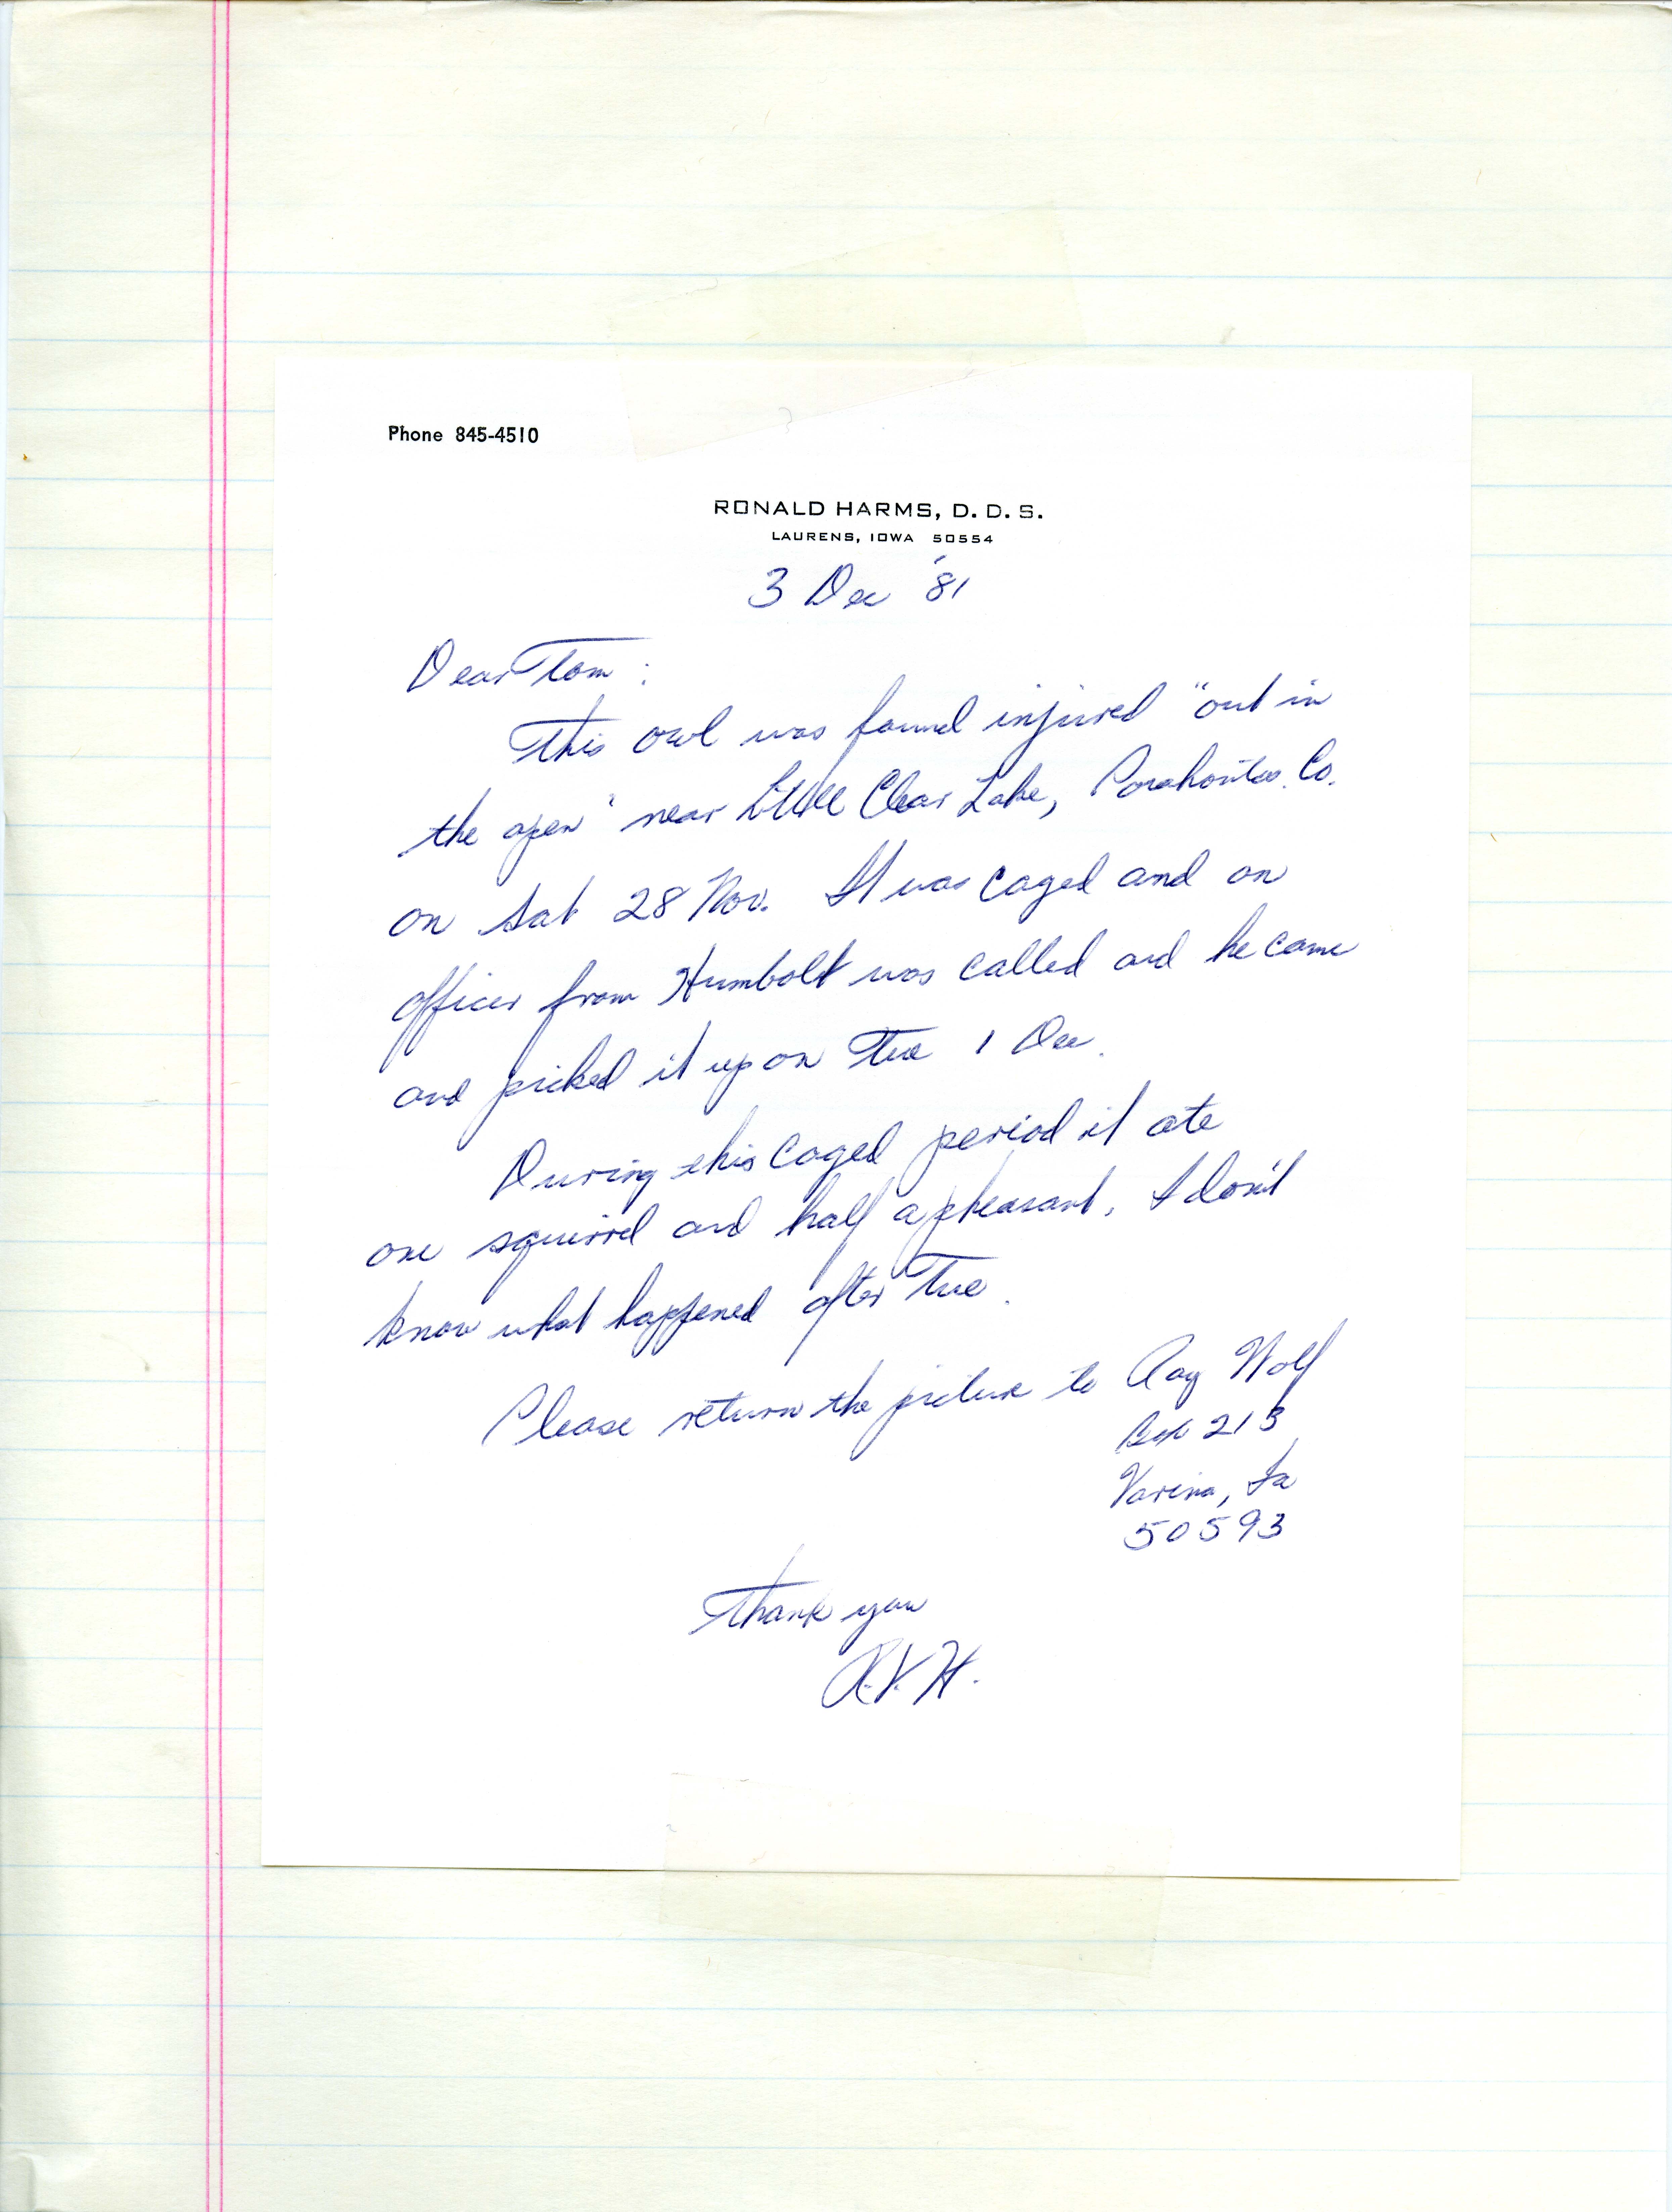 Ronald Harms letter to Thomas H. Kent regarding an injured caged owl, December 3, 1981